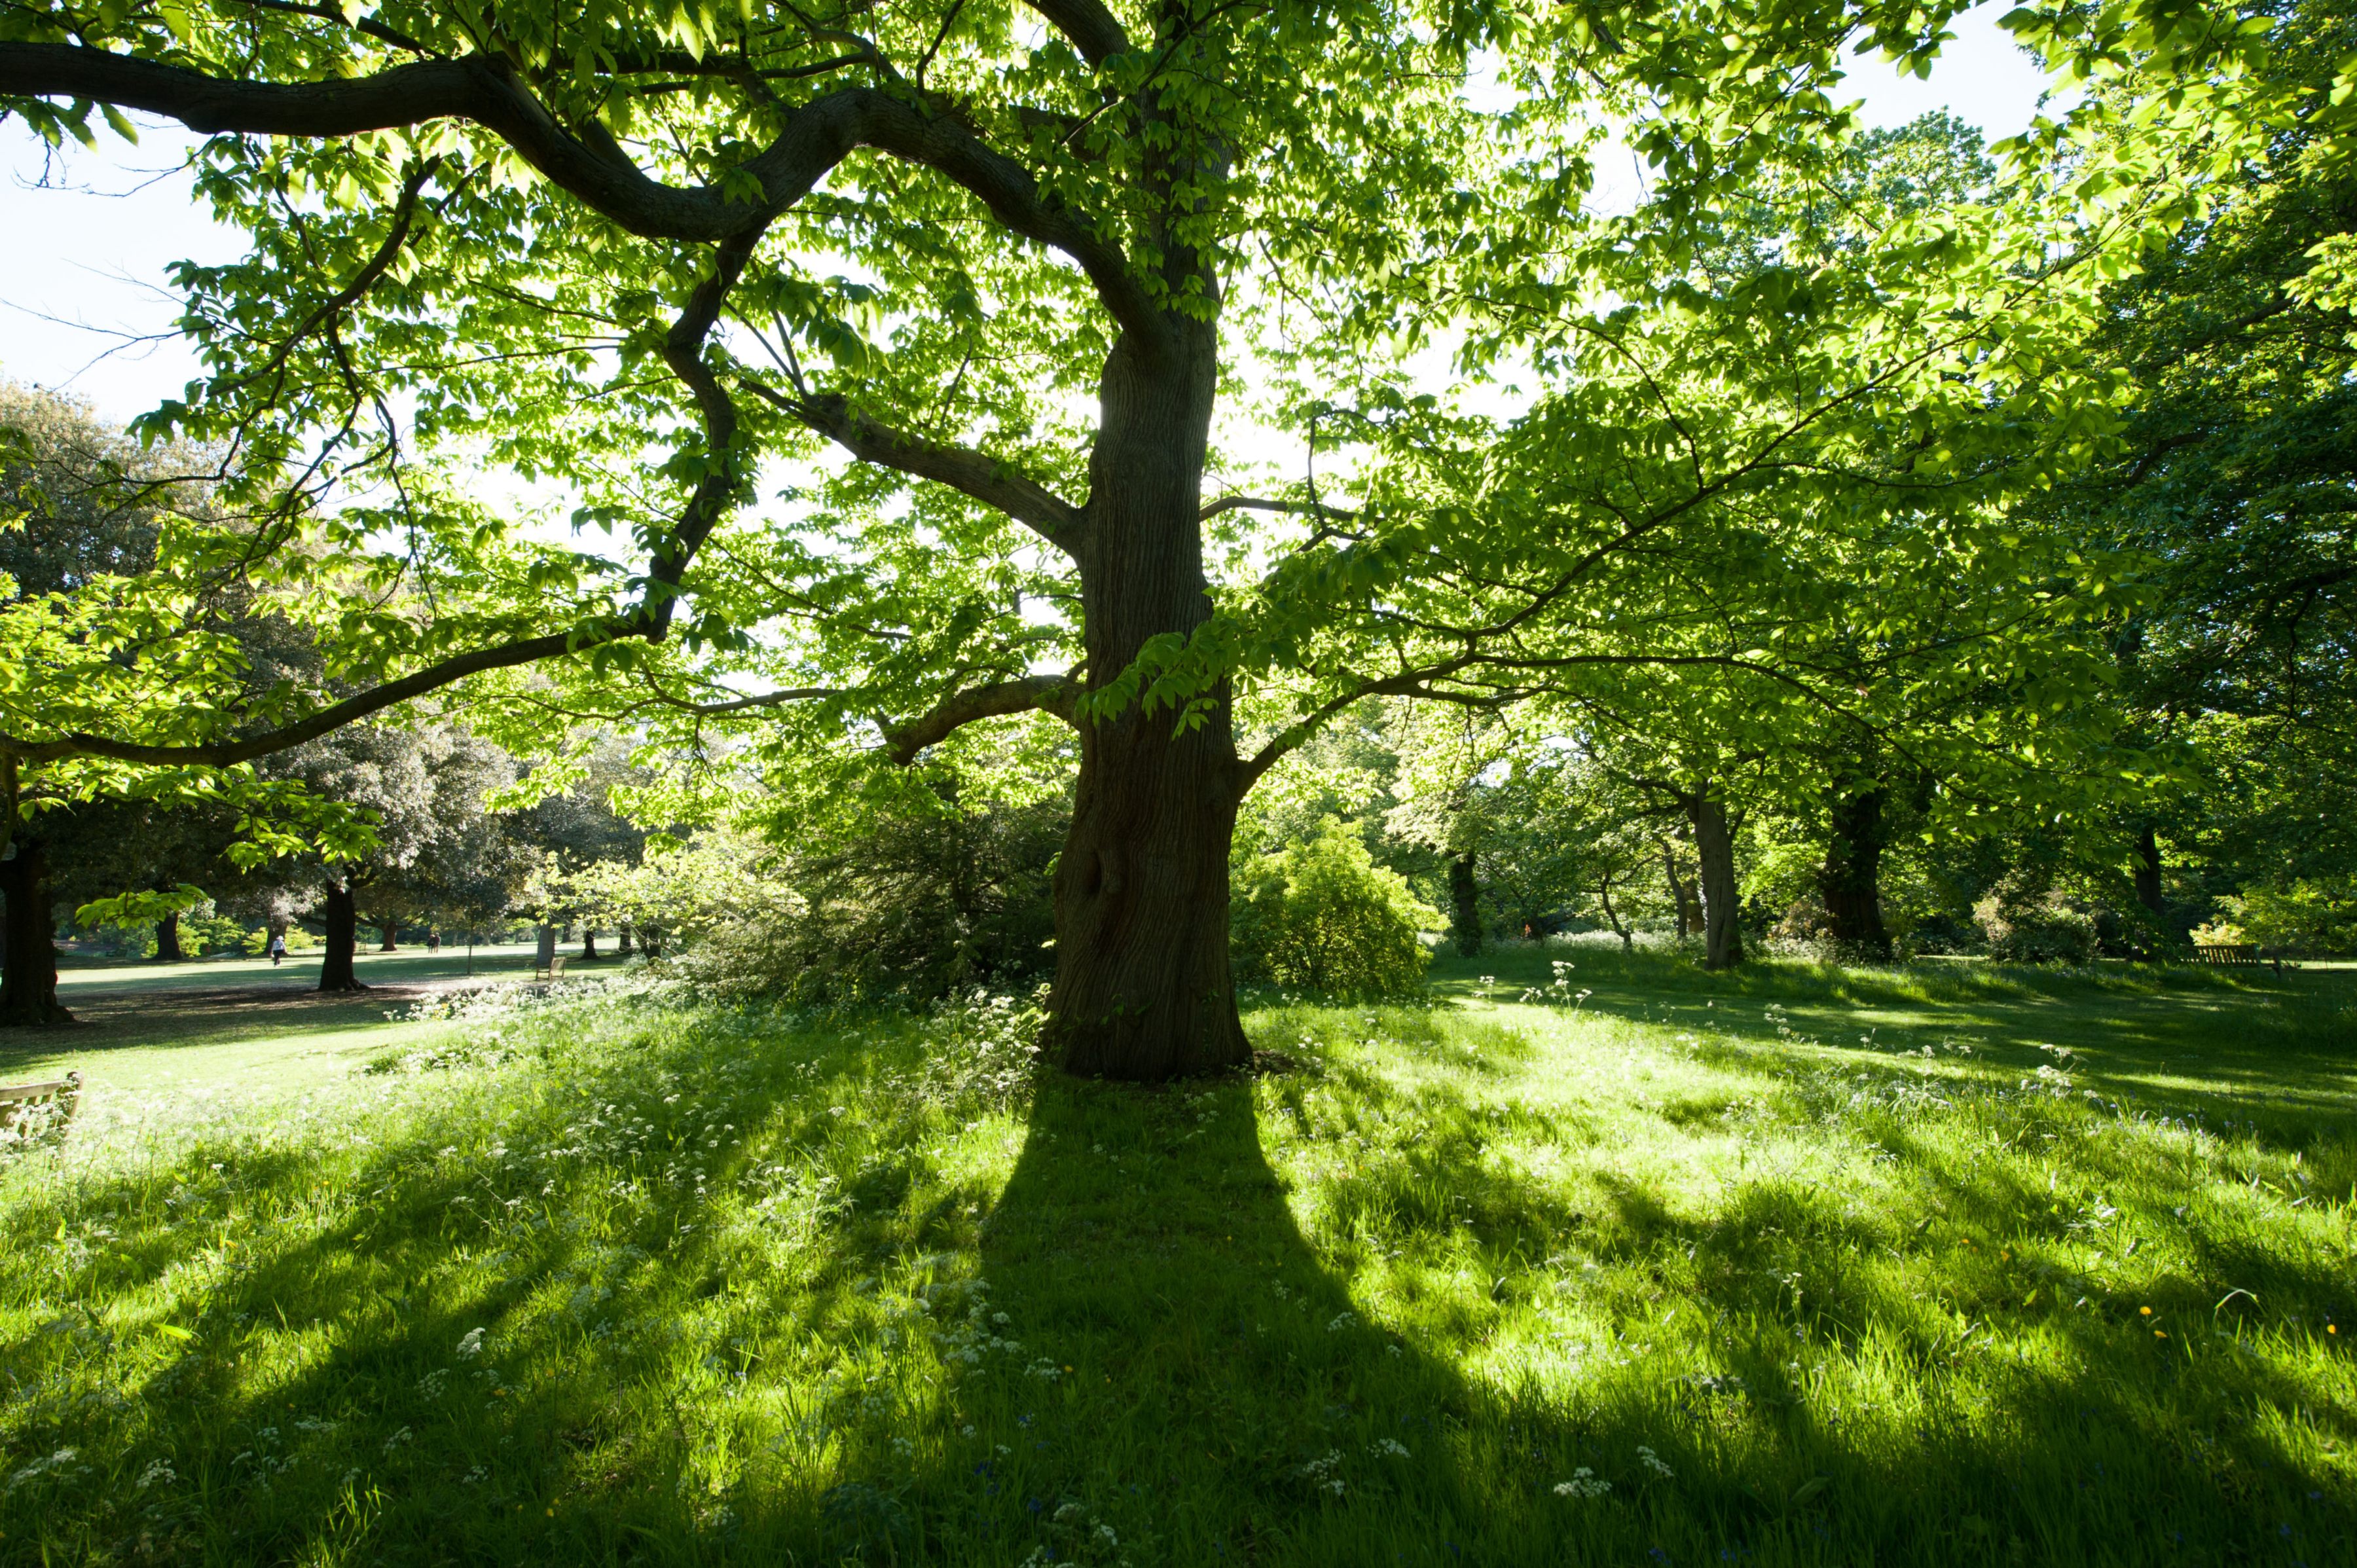 The Arboretum at Kew